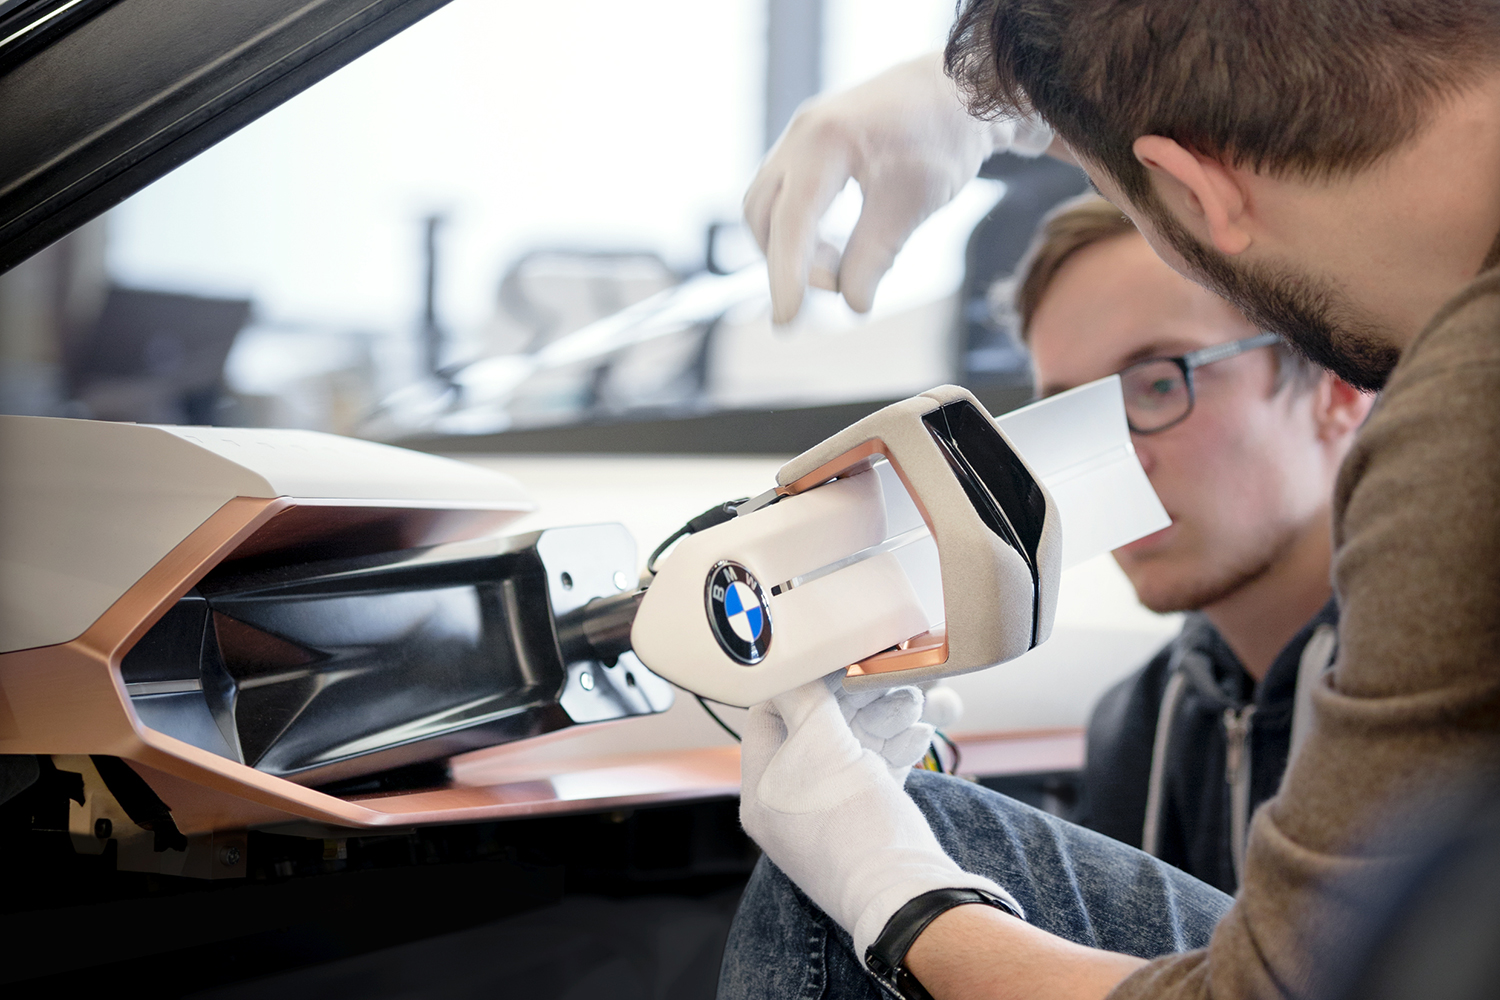 New Car: BMW Vision Next 100 concept | Article | Car Design News